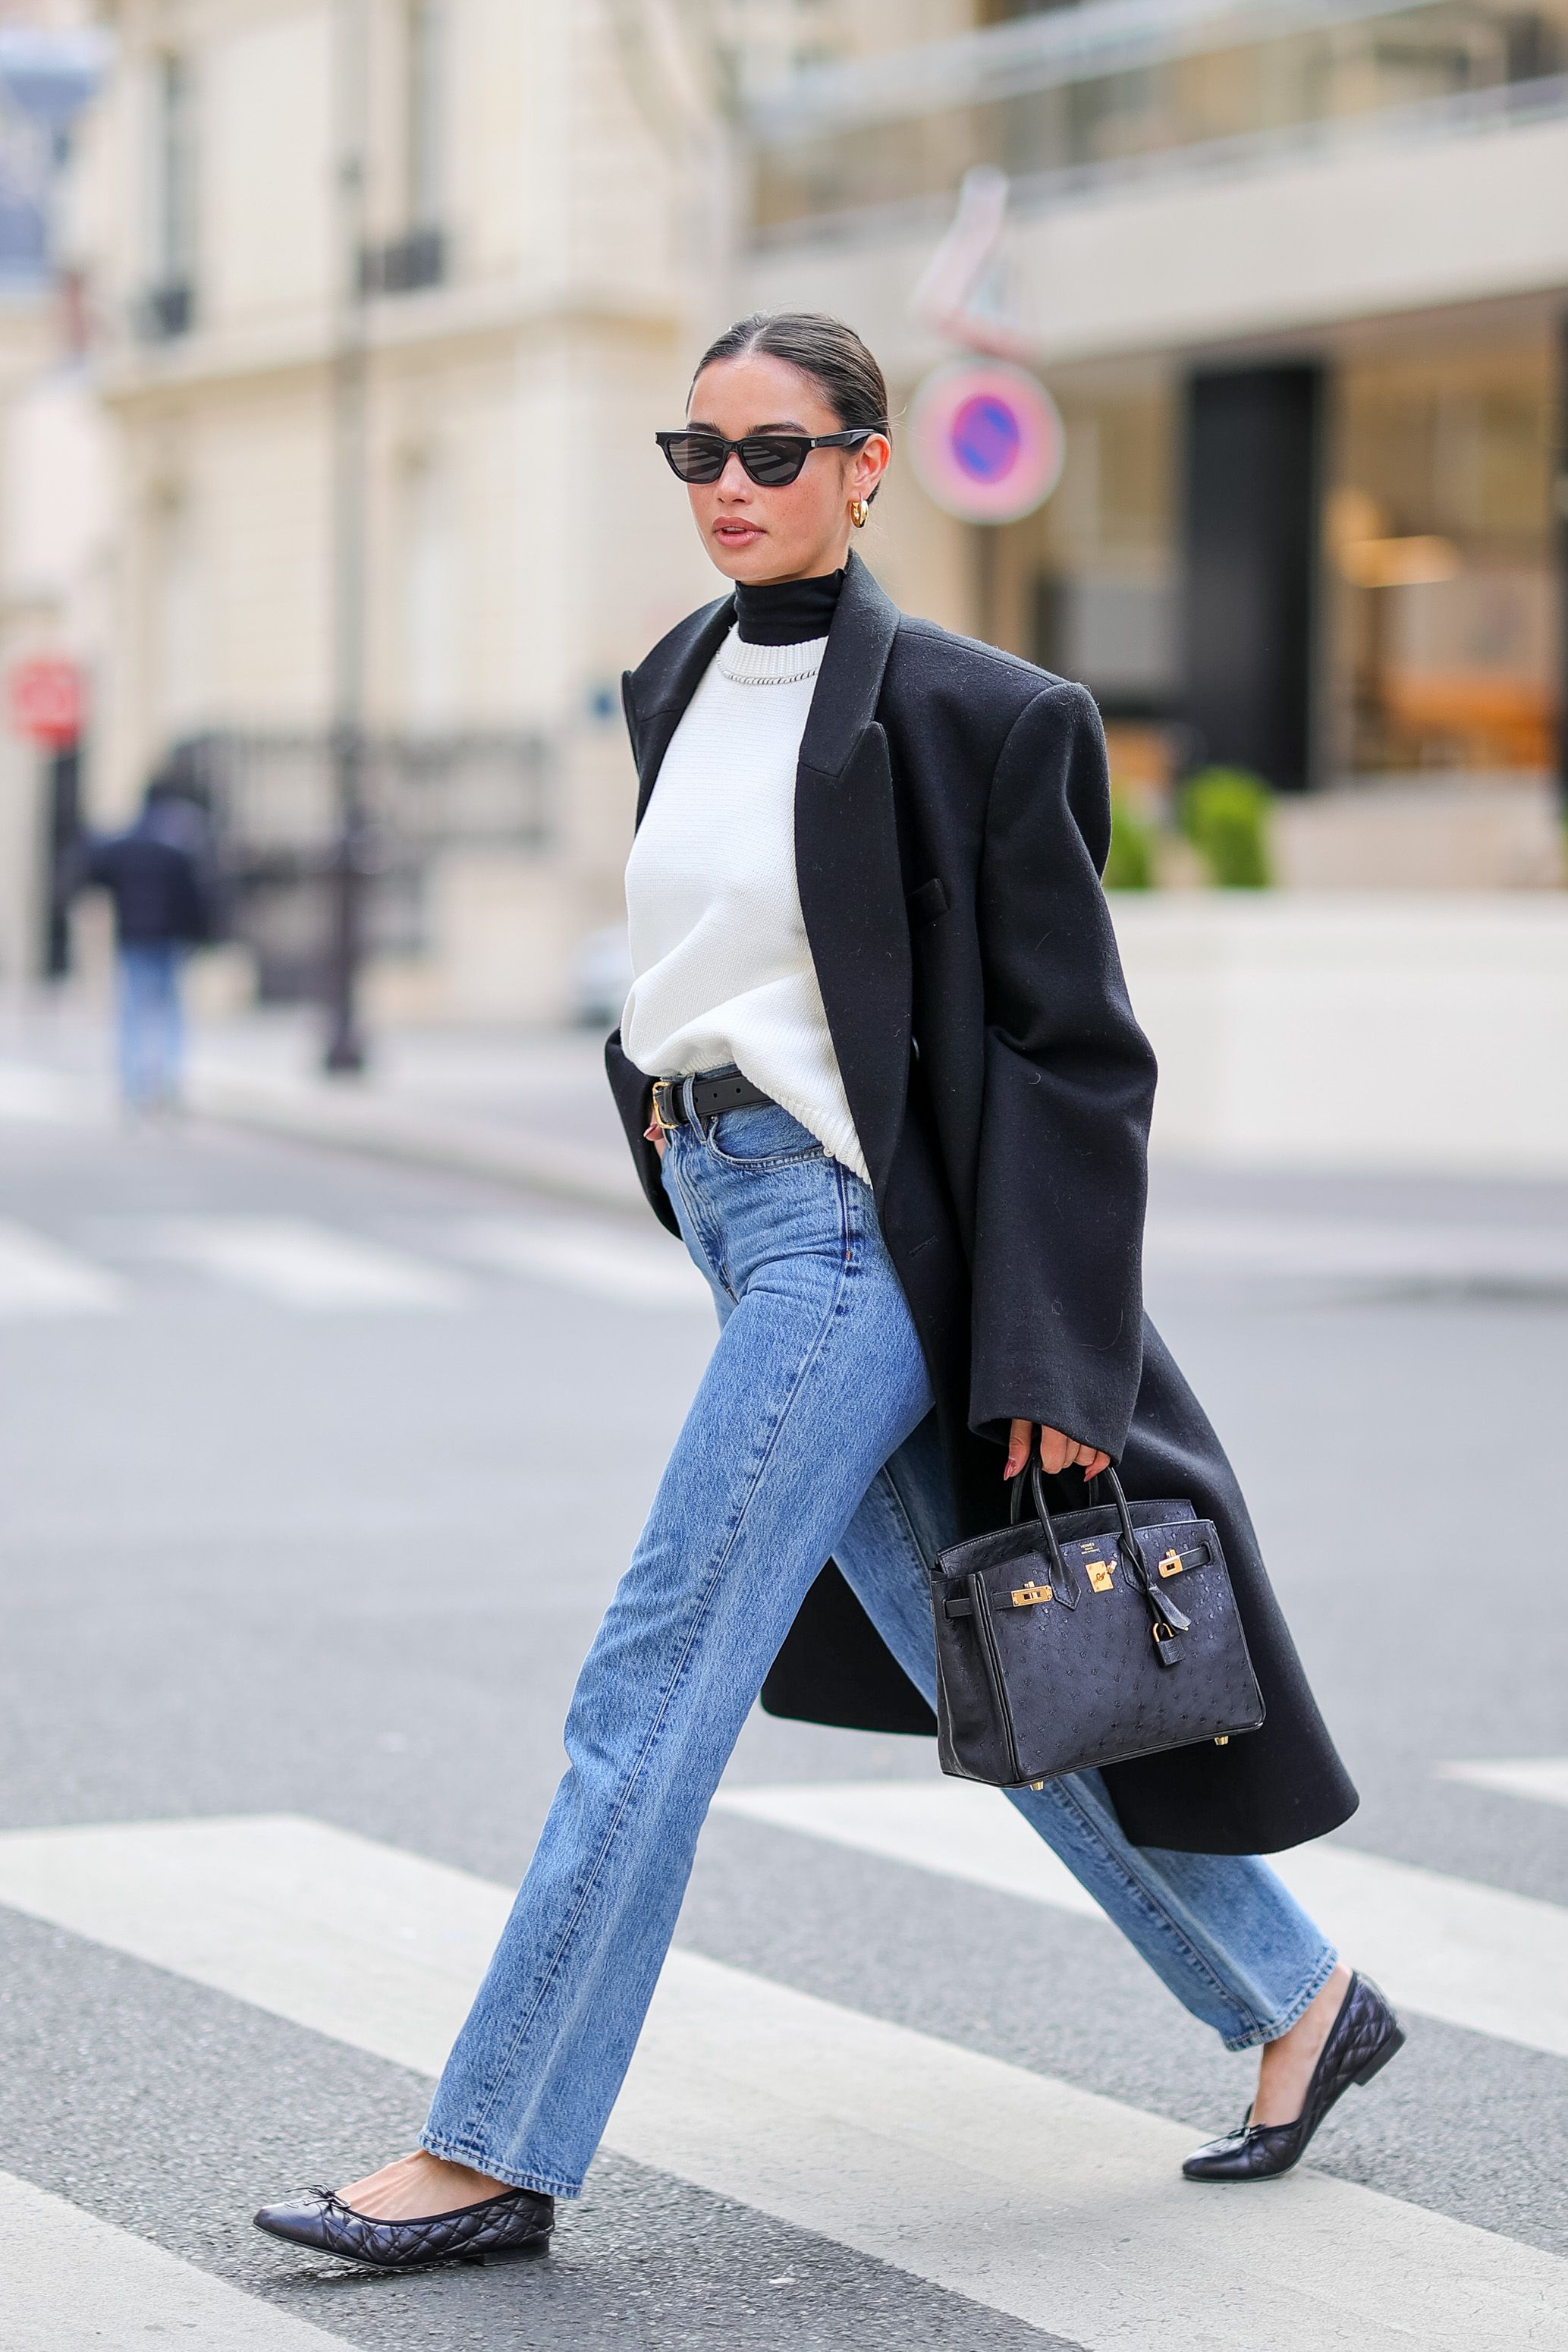 AD Fashion Store Women Denim Cargo Z Black Jeans Lycra |Jeans |Cargo|ZblackJeans|6PocketJeans|NewArrival|